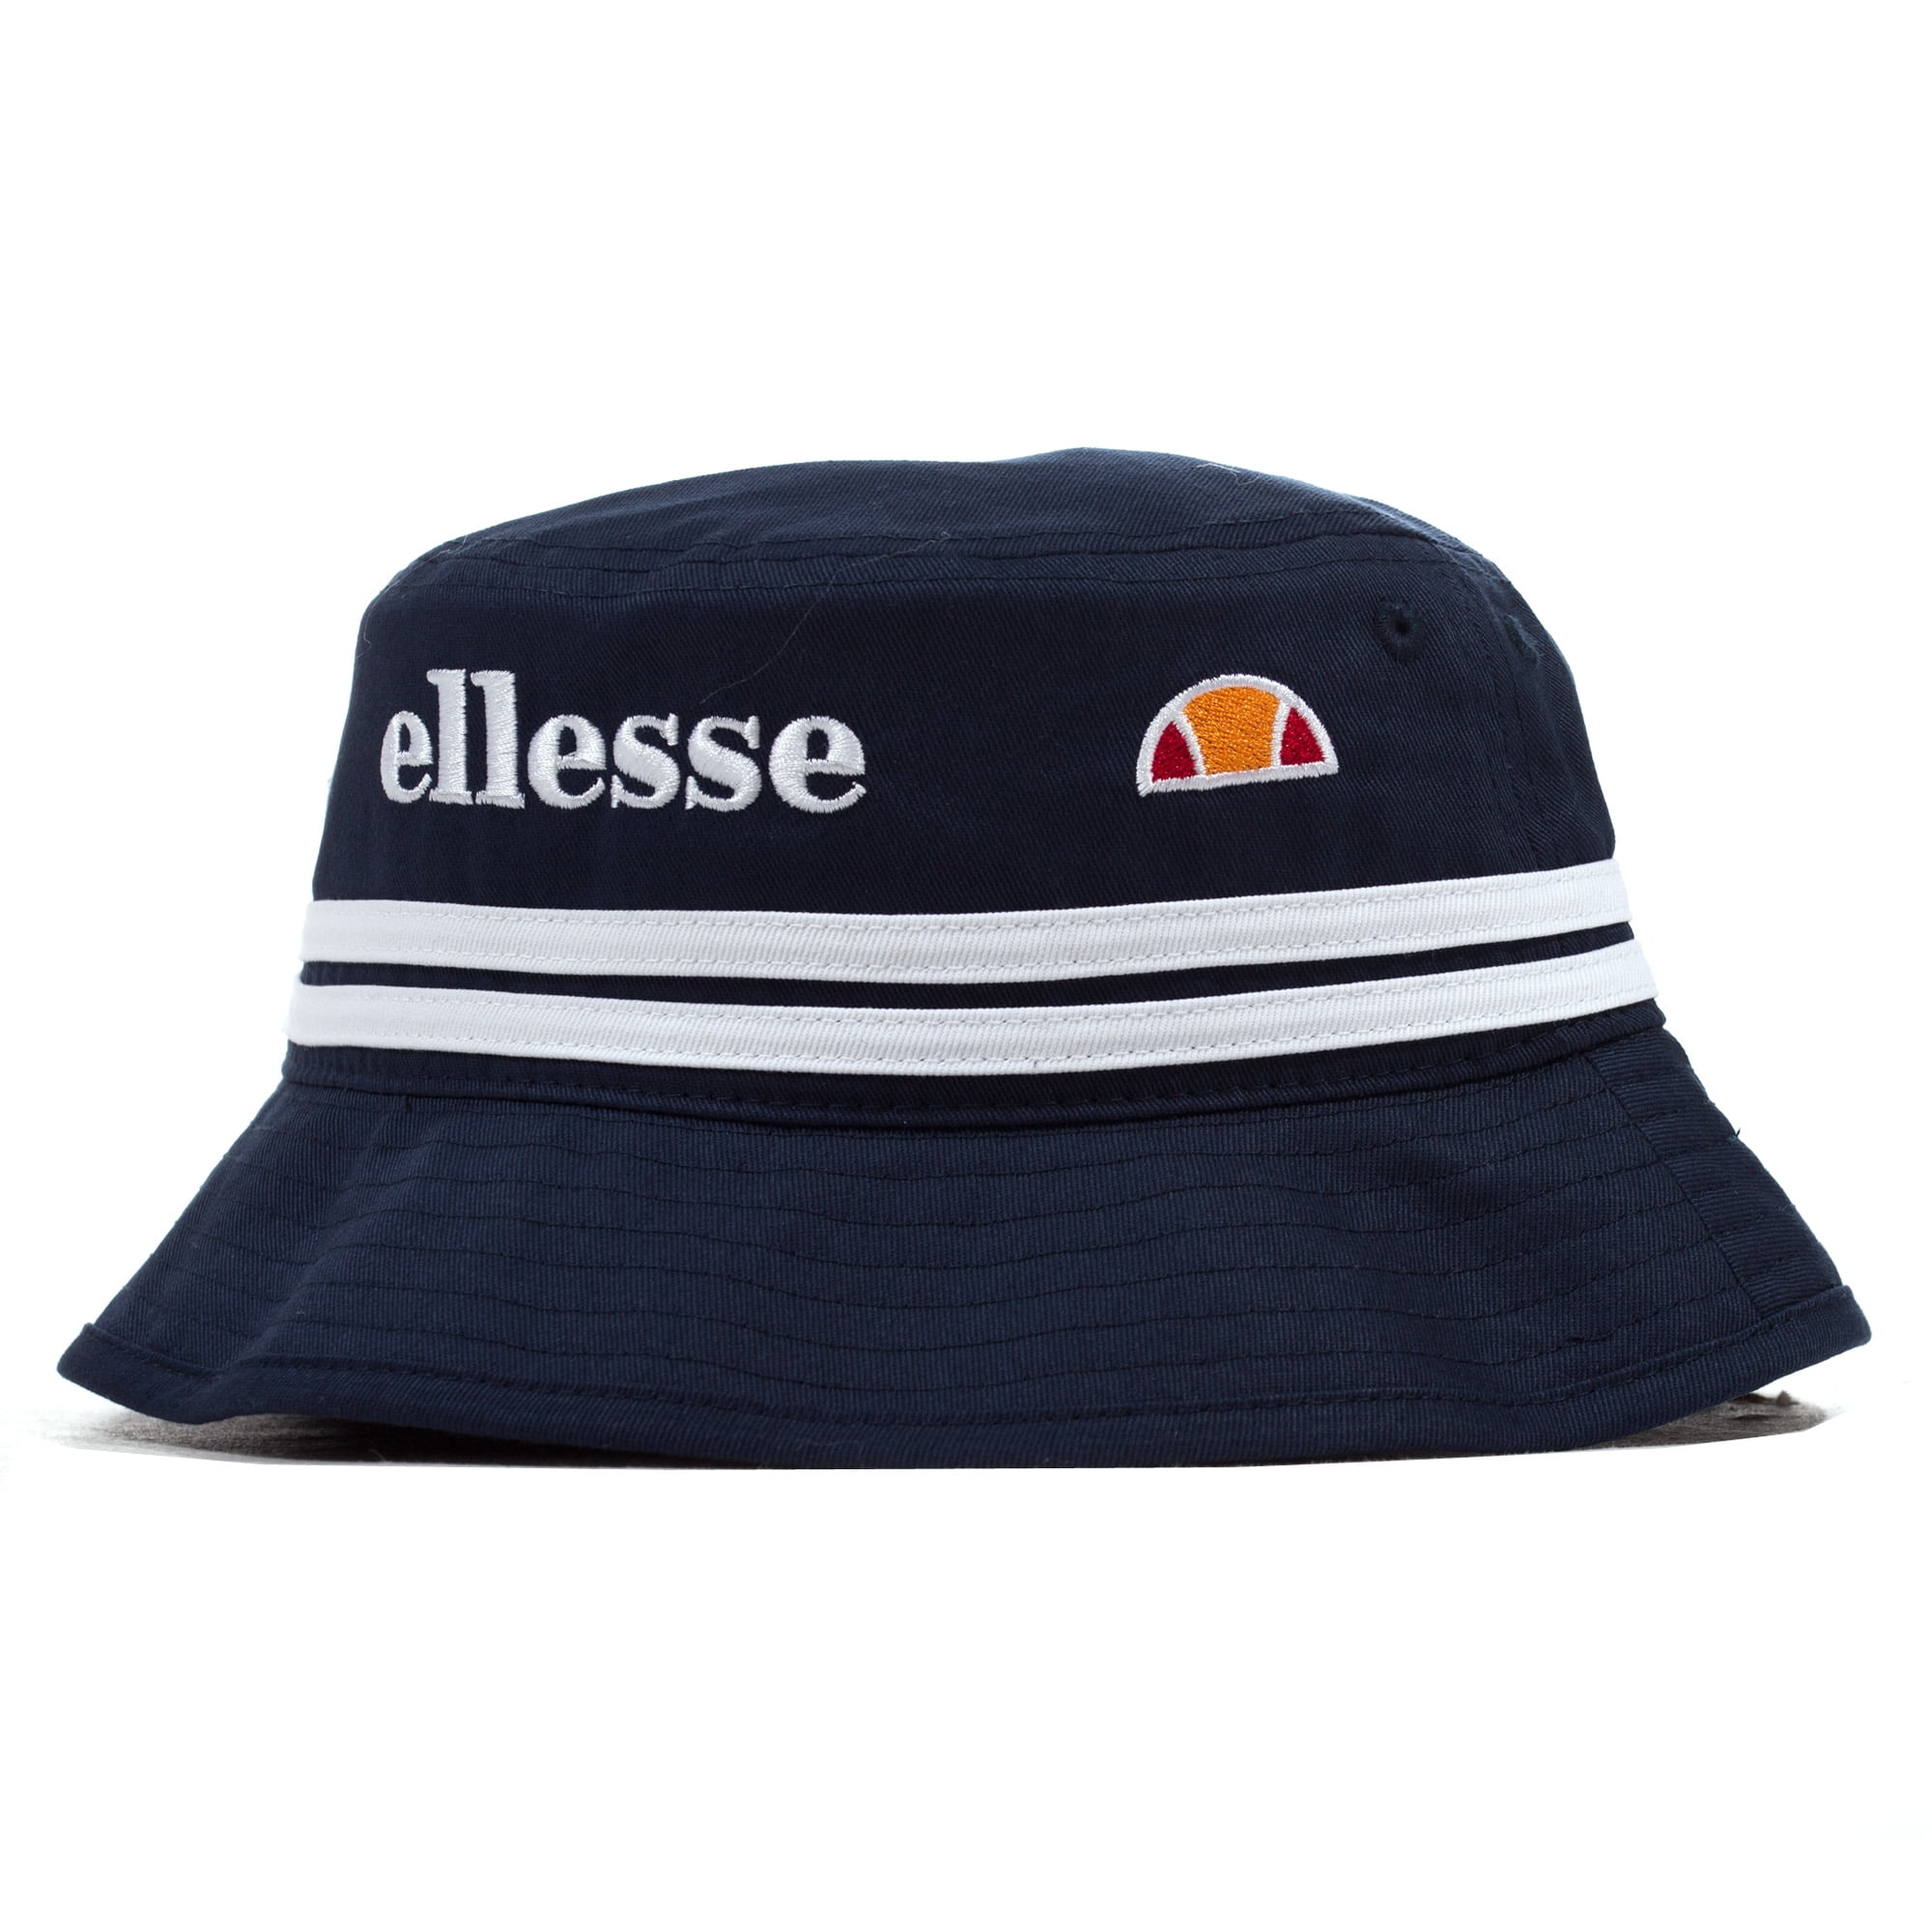 Ellesse Heritage Lorenzo Fashion Festival Bucket Hat One Size - Navy Blue